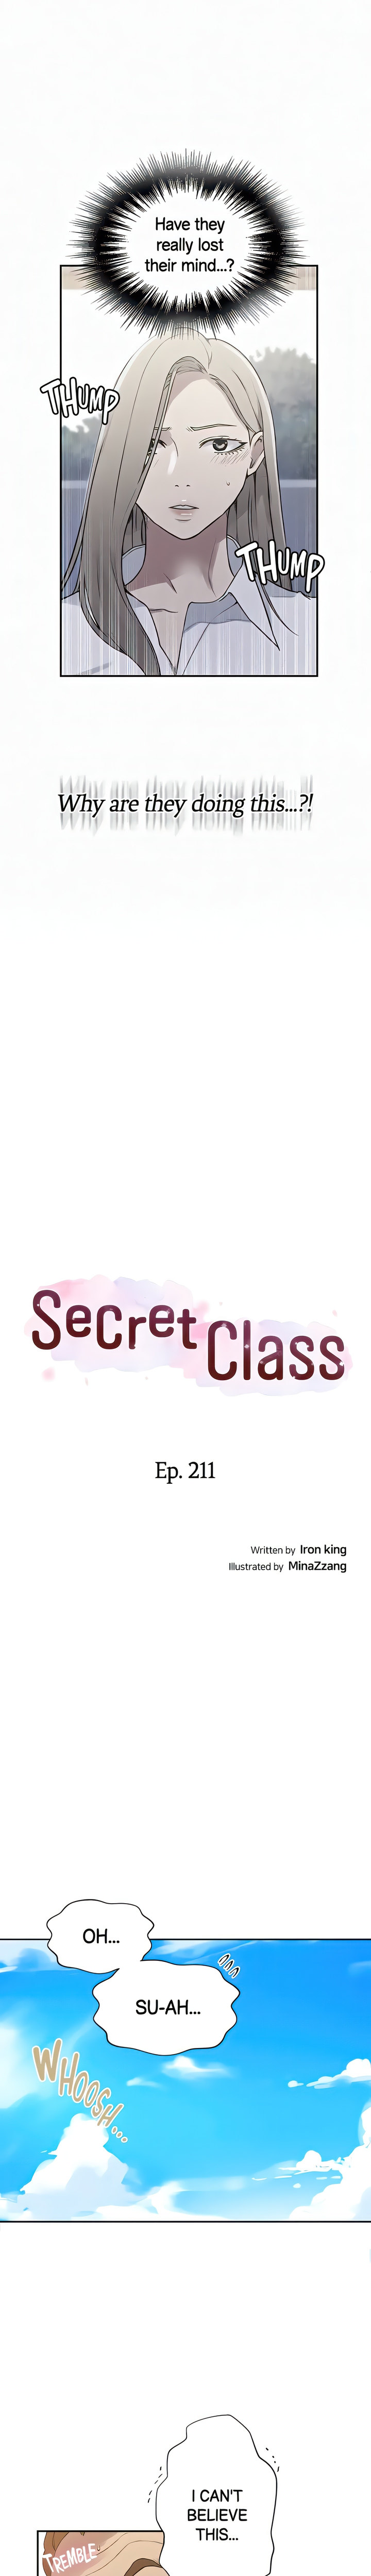 Secret Class - Chapter 211 Page 2